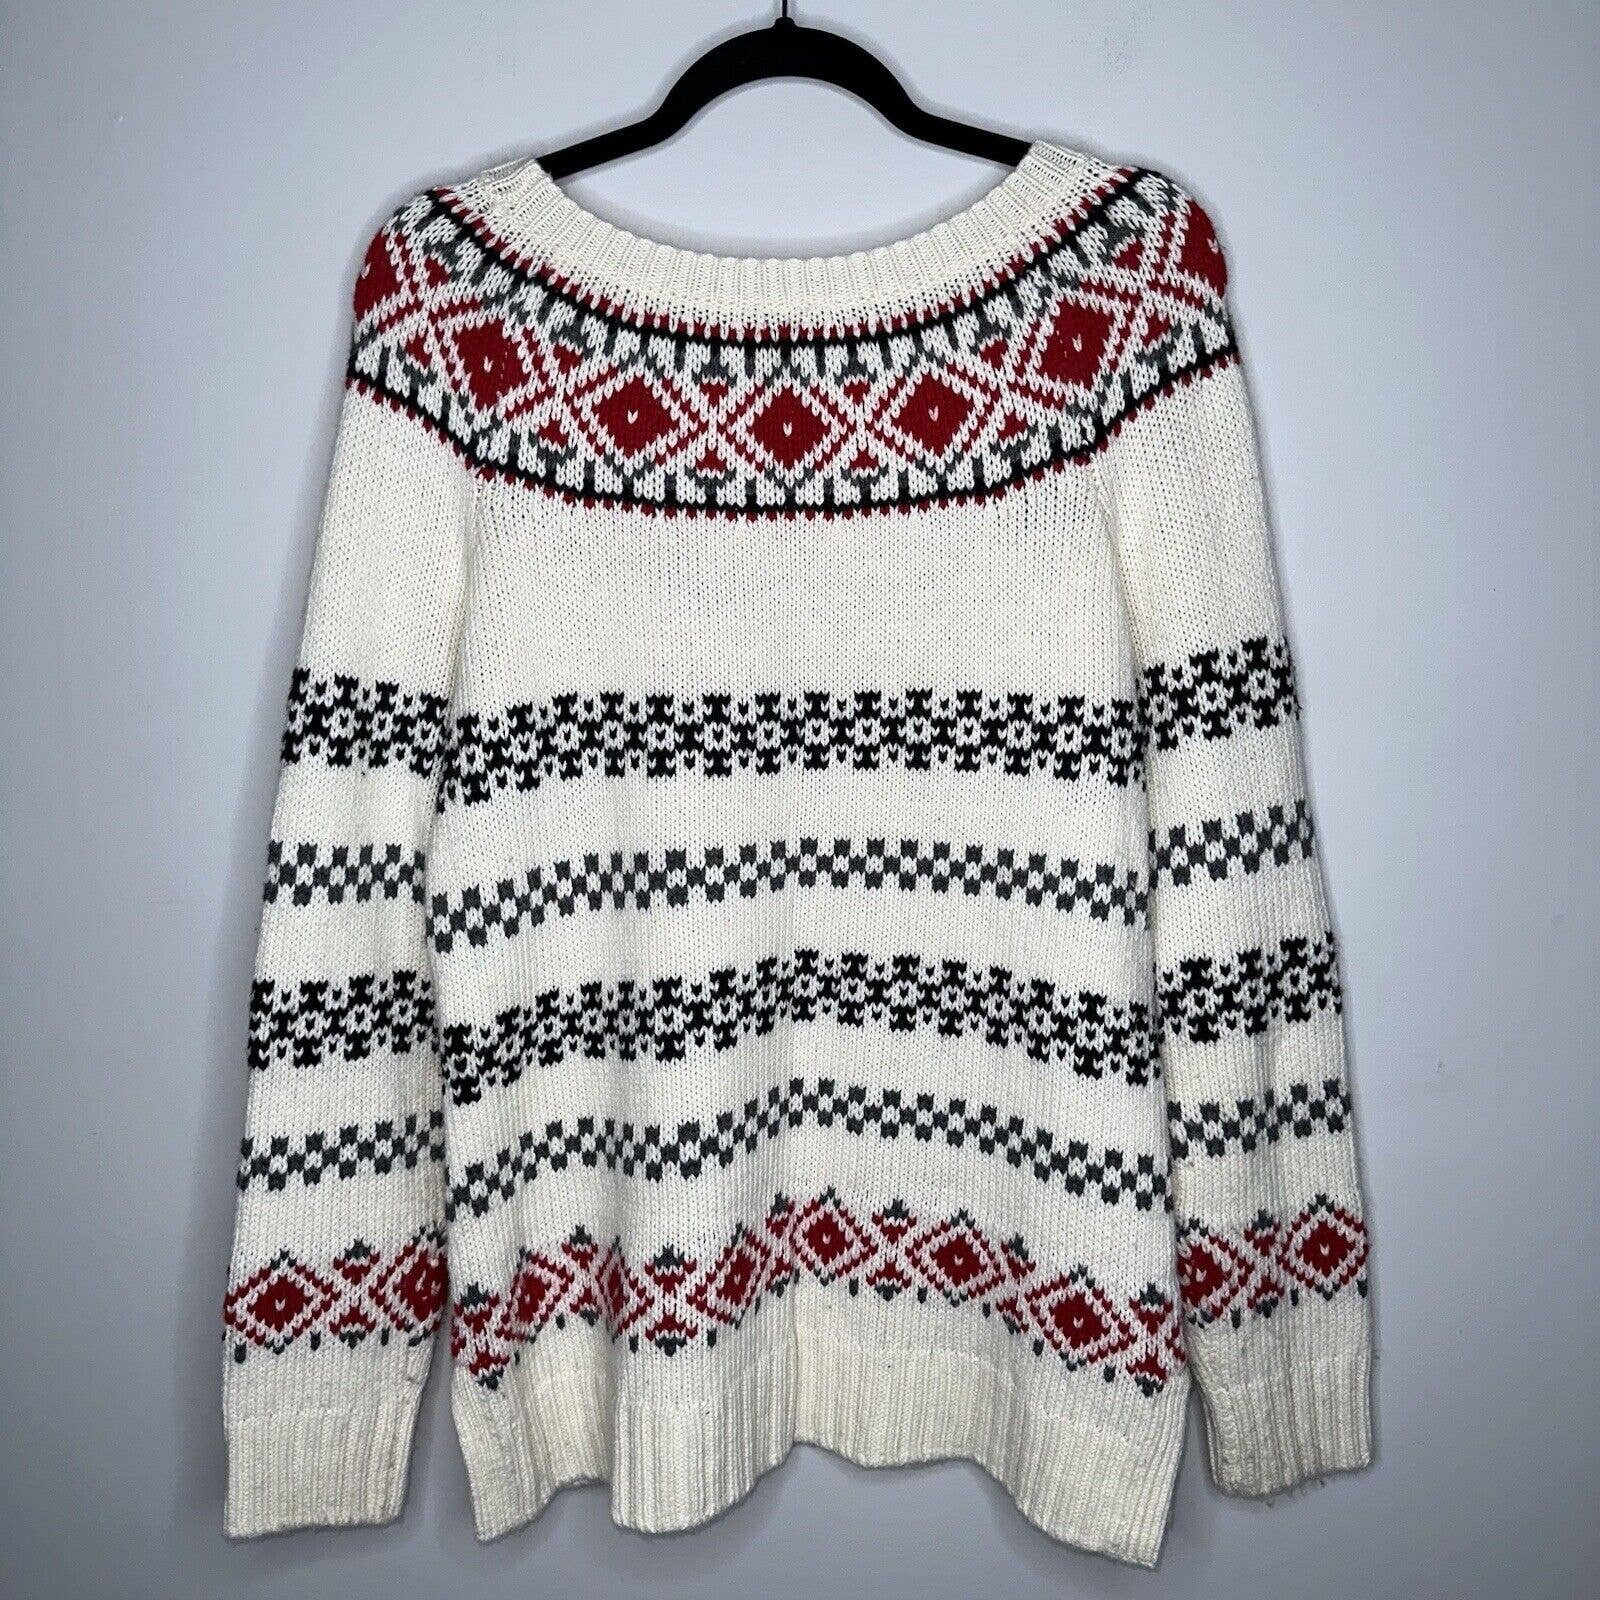 large selection Talbots Women’s Nordic Fair Isle Crewneck Sweater Size Large iR2uZ8ukK well sale